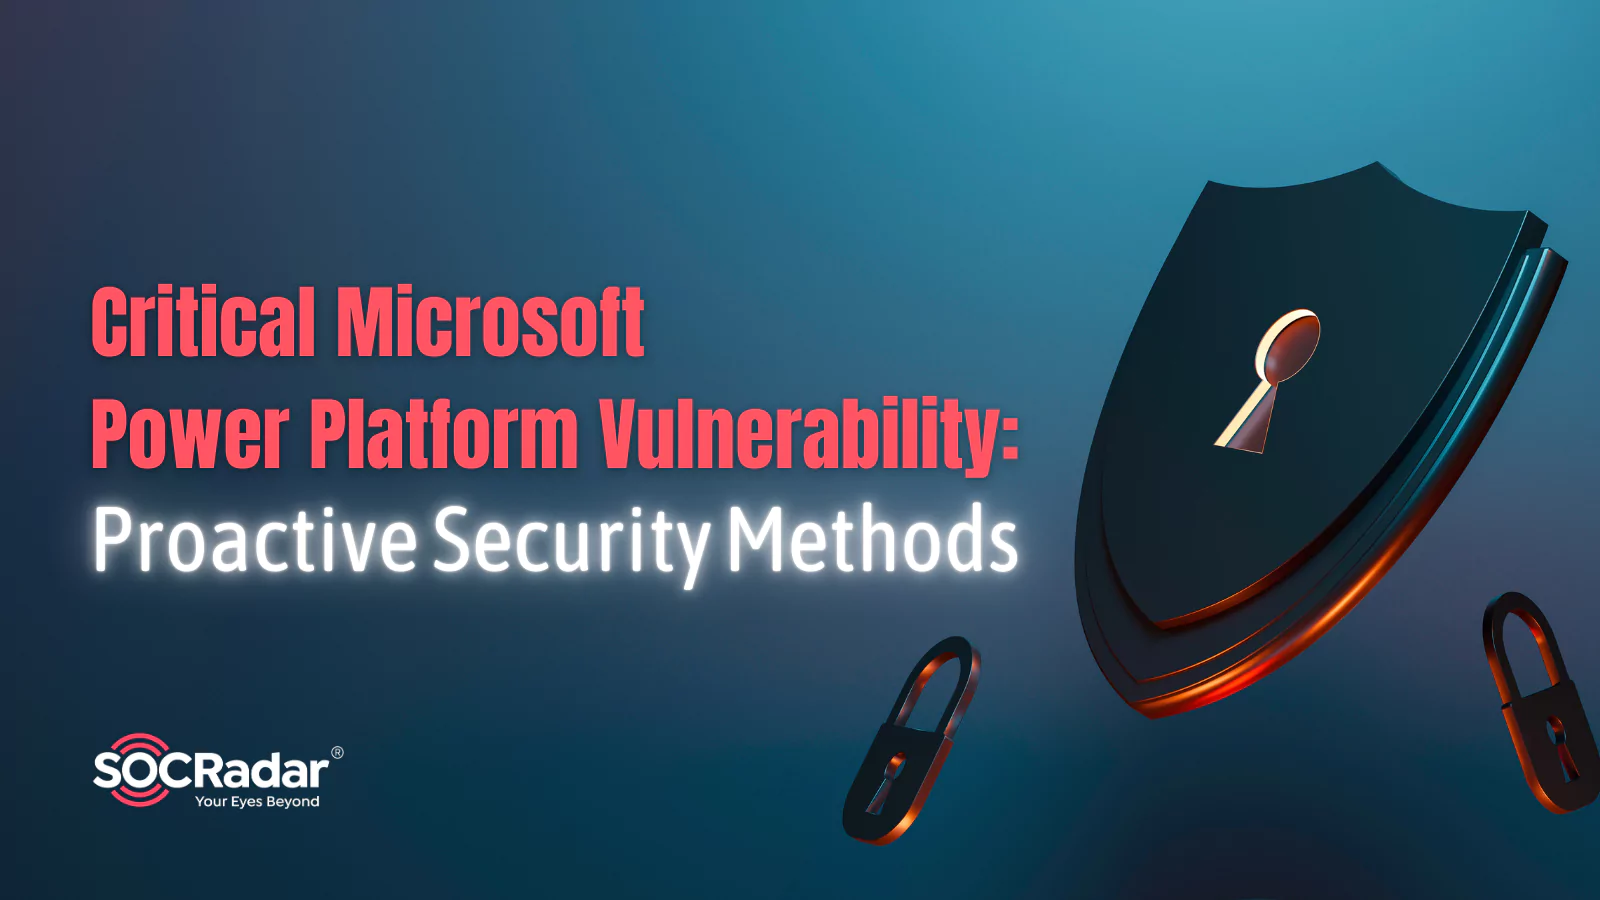 SOCRadar® Cyber Intelligence Inc. | Critical Microsoft Power Platform Vulnerability: Proactive Security Methods to Prevent Exploitation